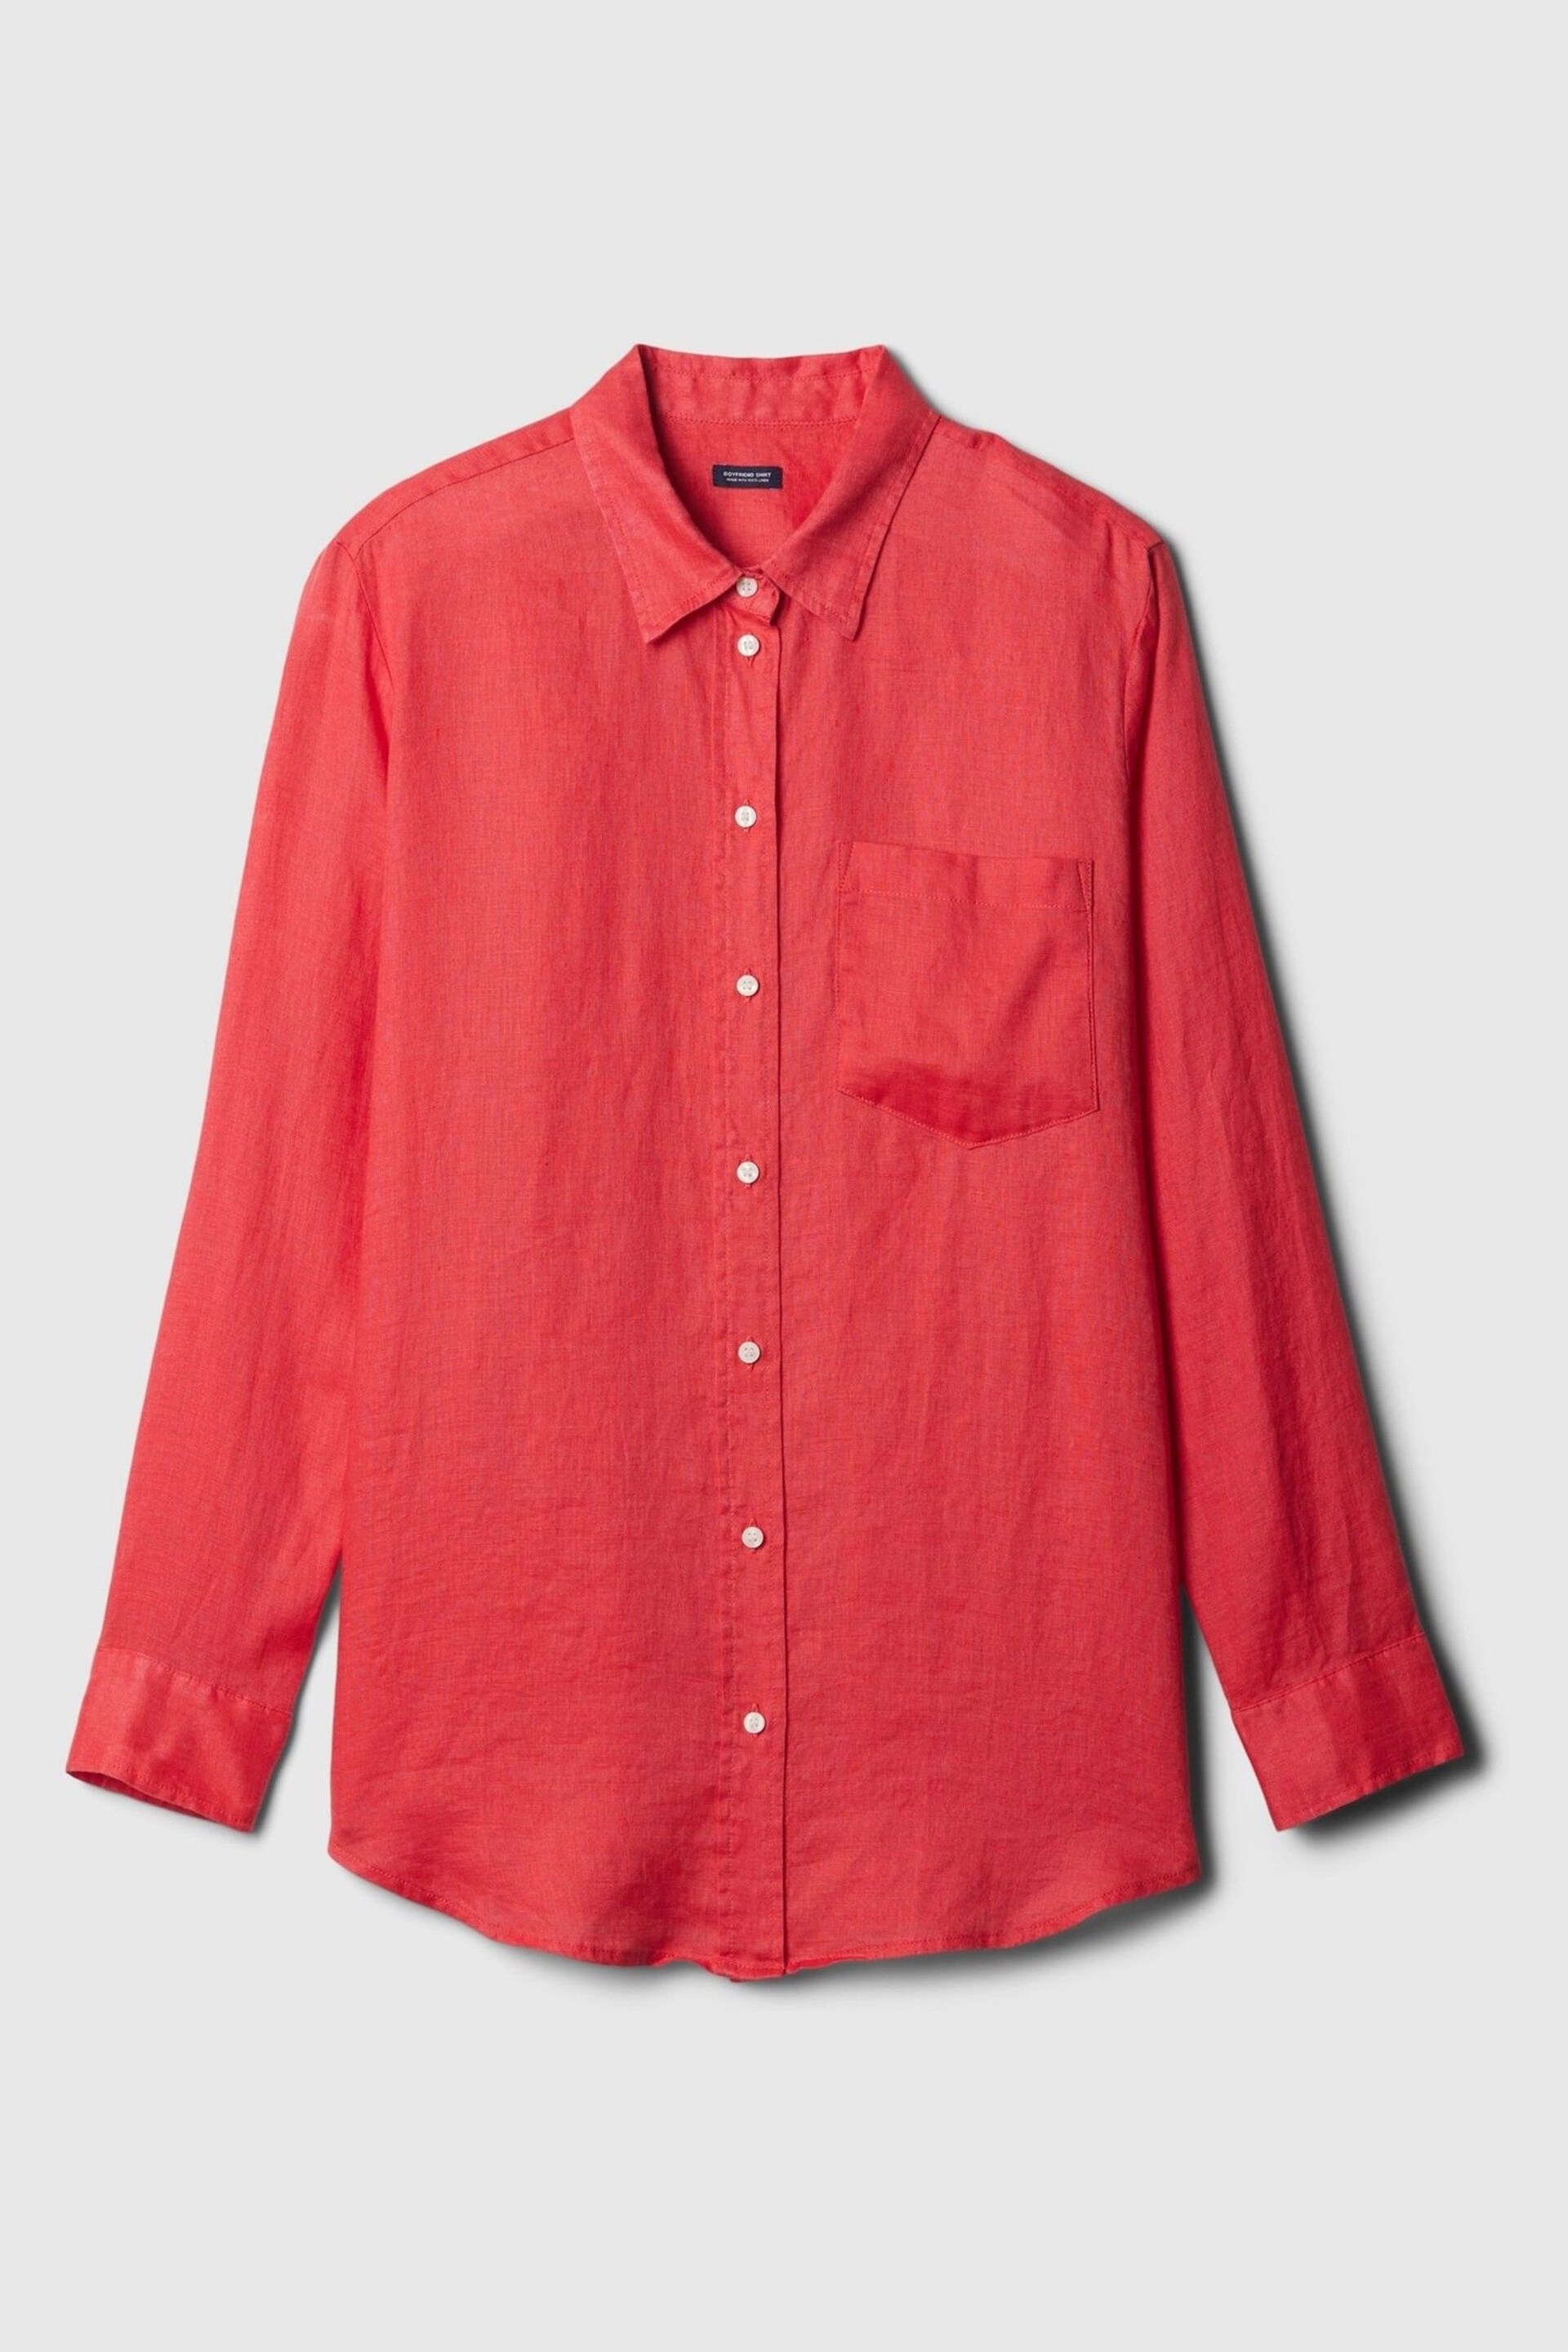 Gap Red 100% Linen Long Sleeve Oversized Shirt - Image 4 of 4